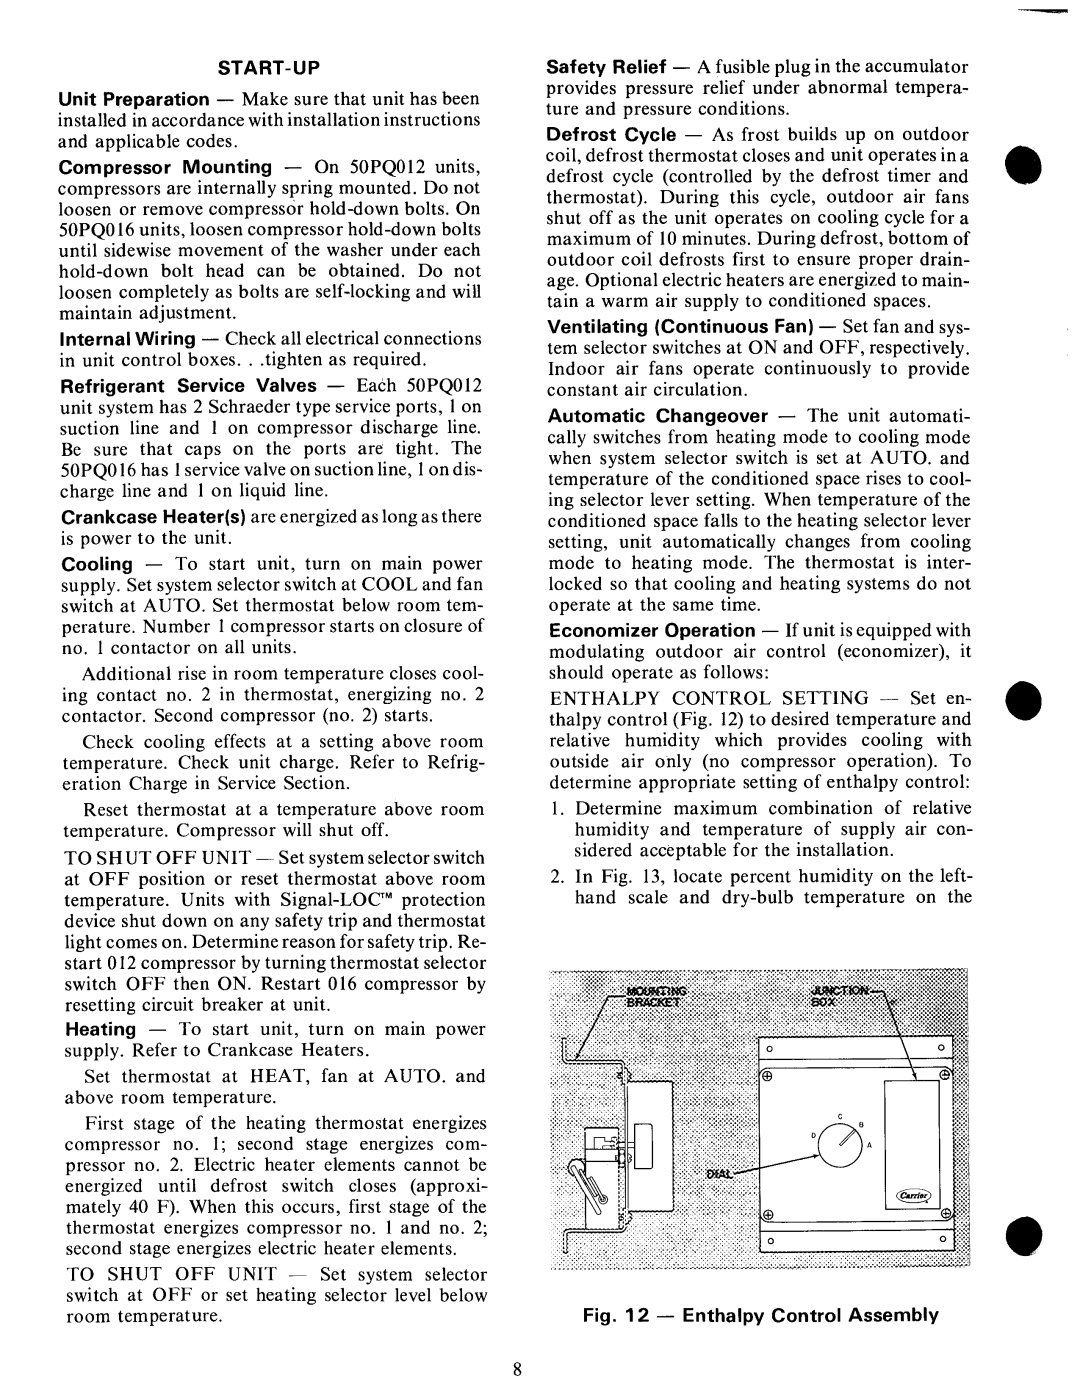 Carrier 50PQ manual 